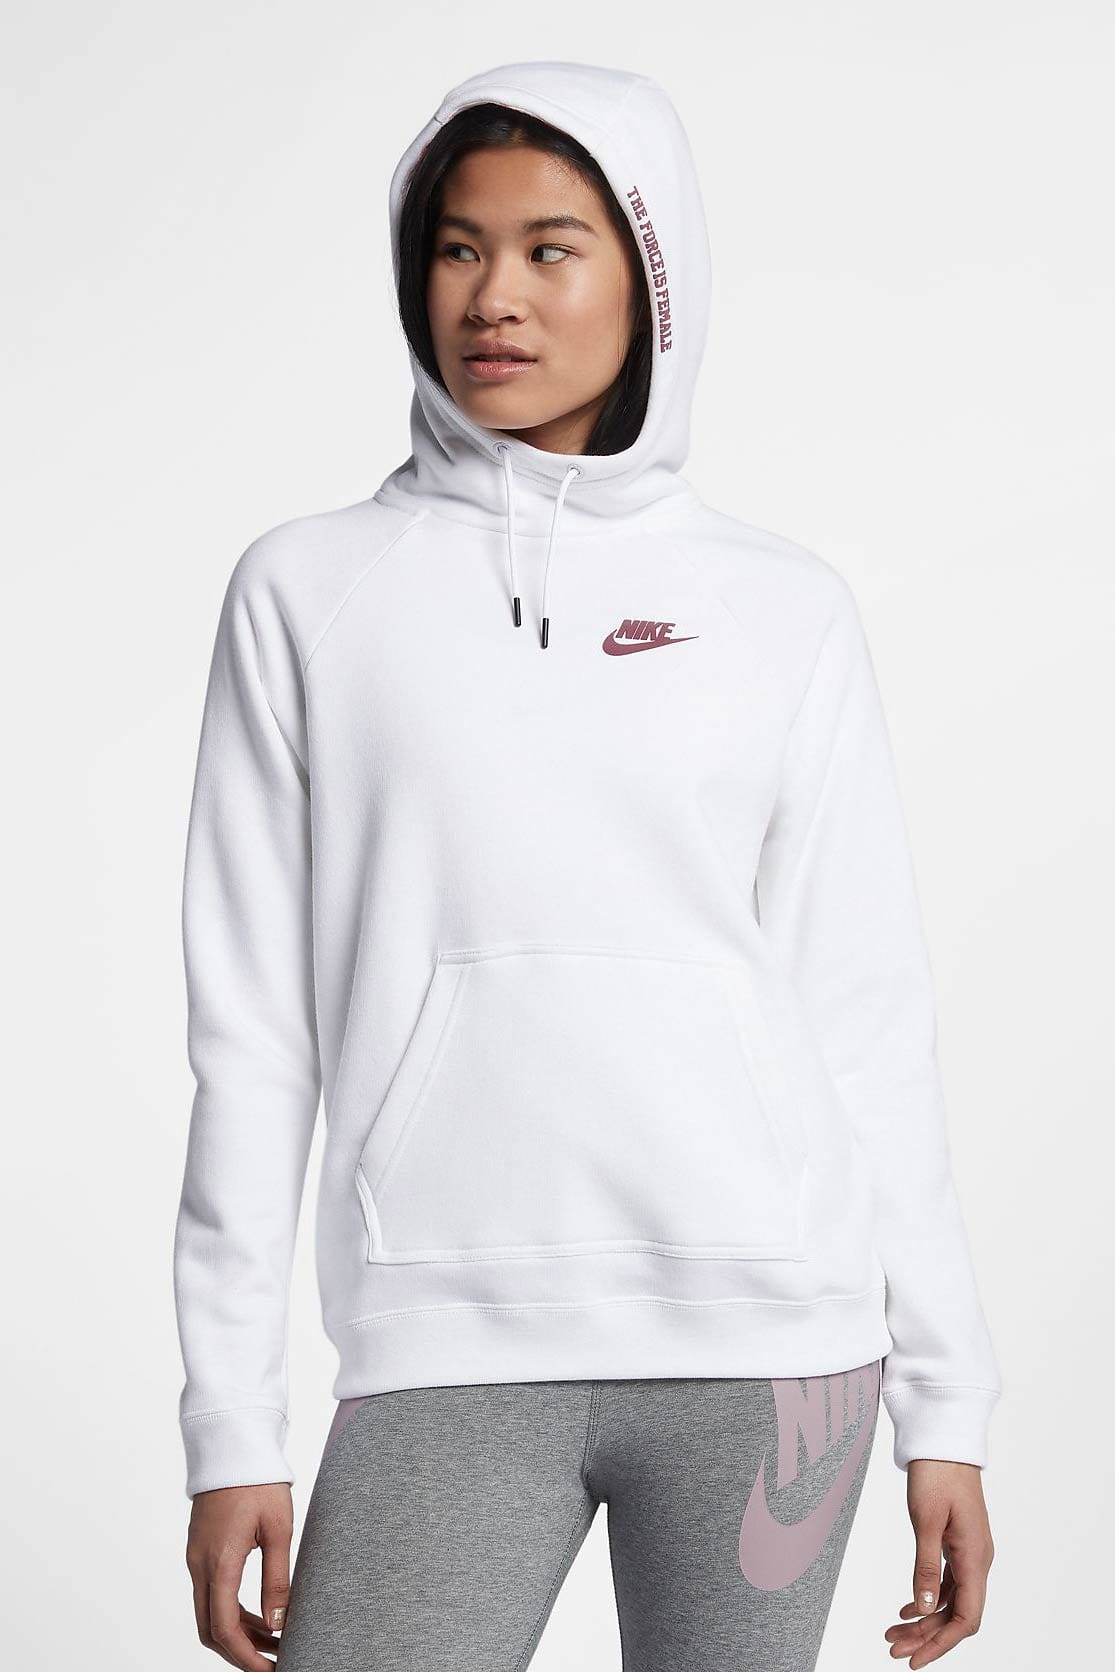 Nike's Force Is Female Hoodie Is a 